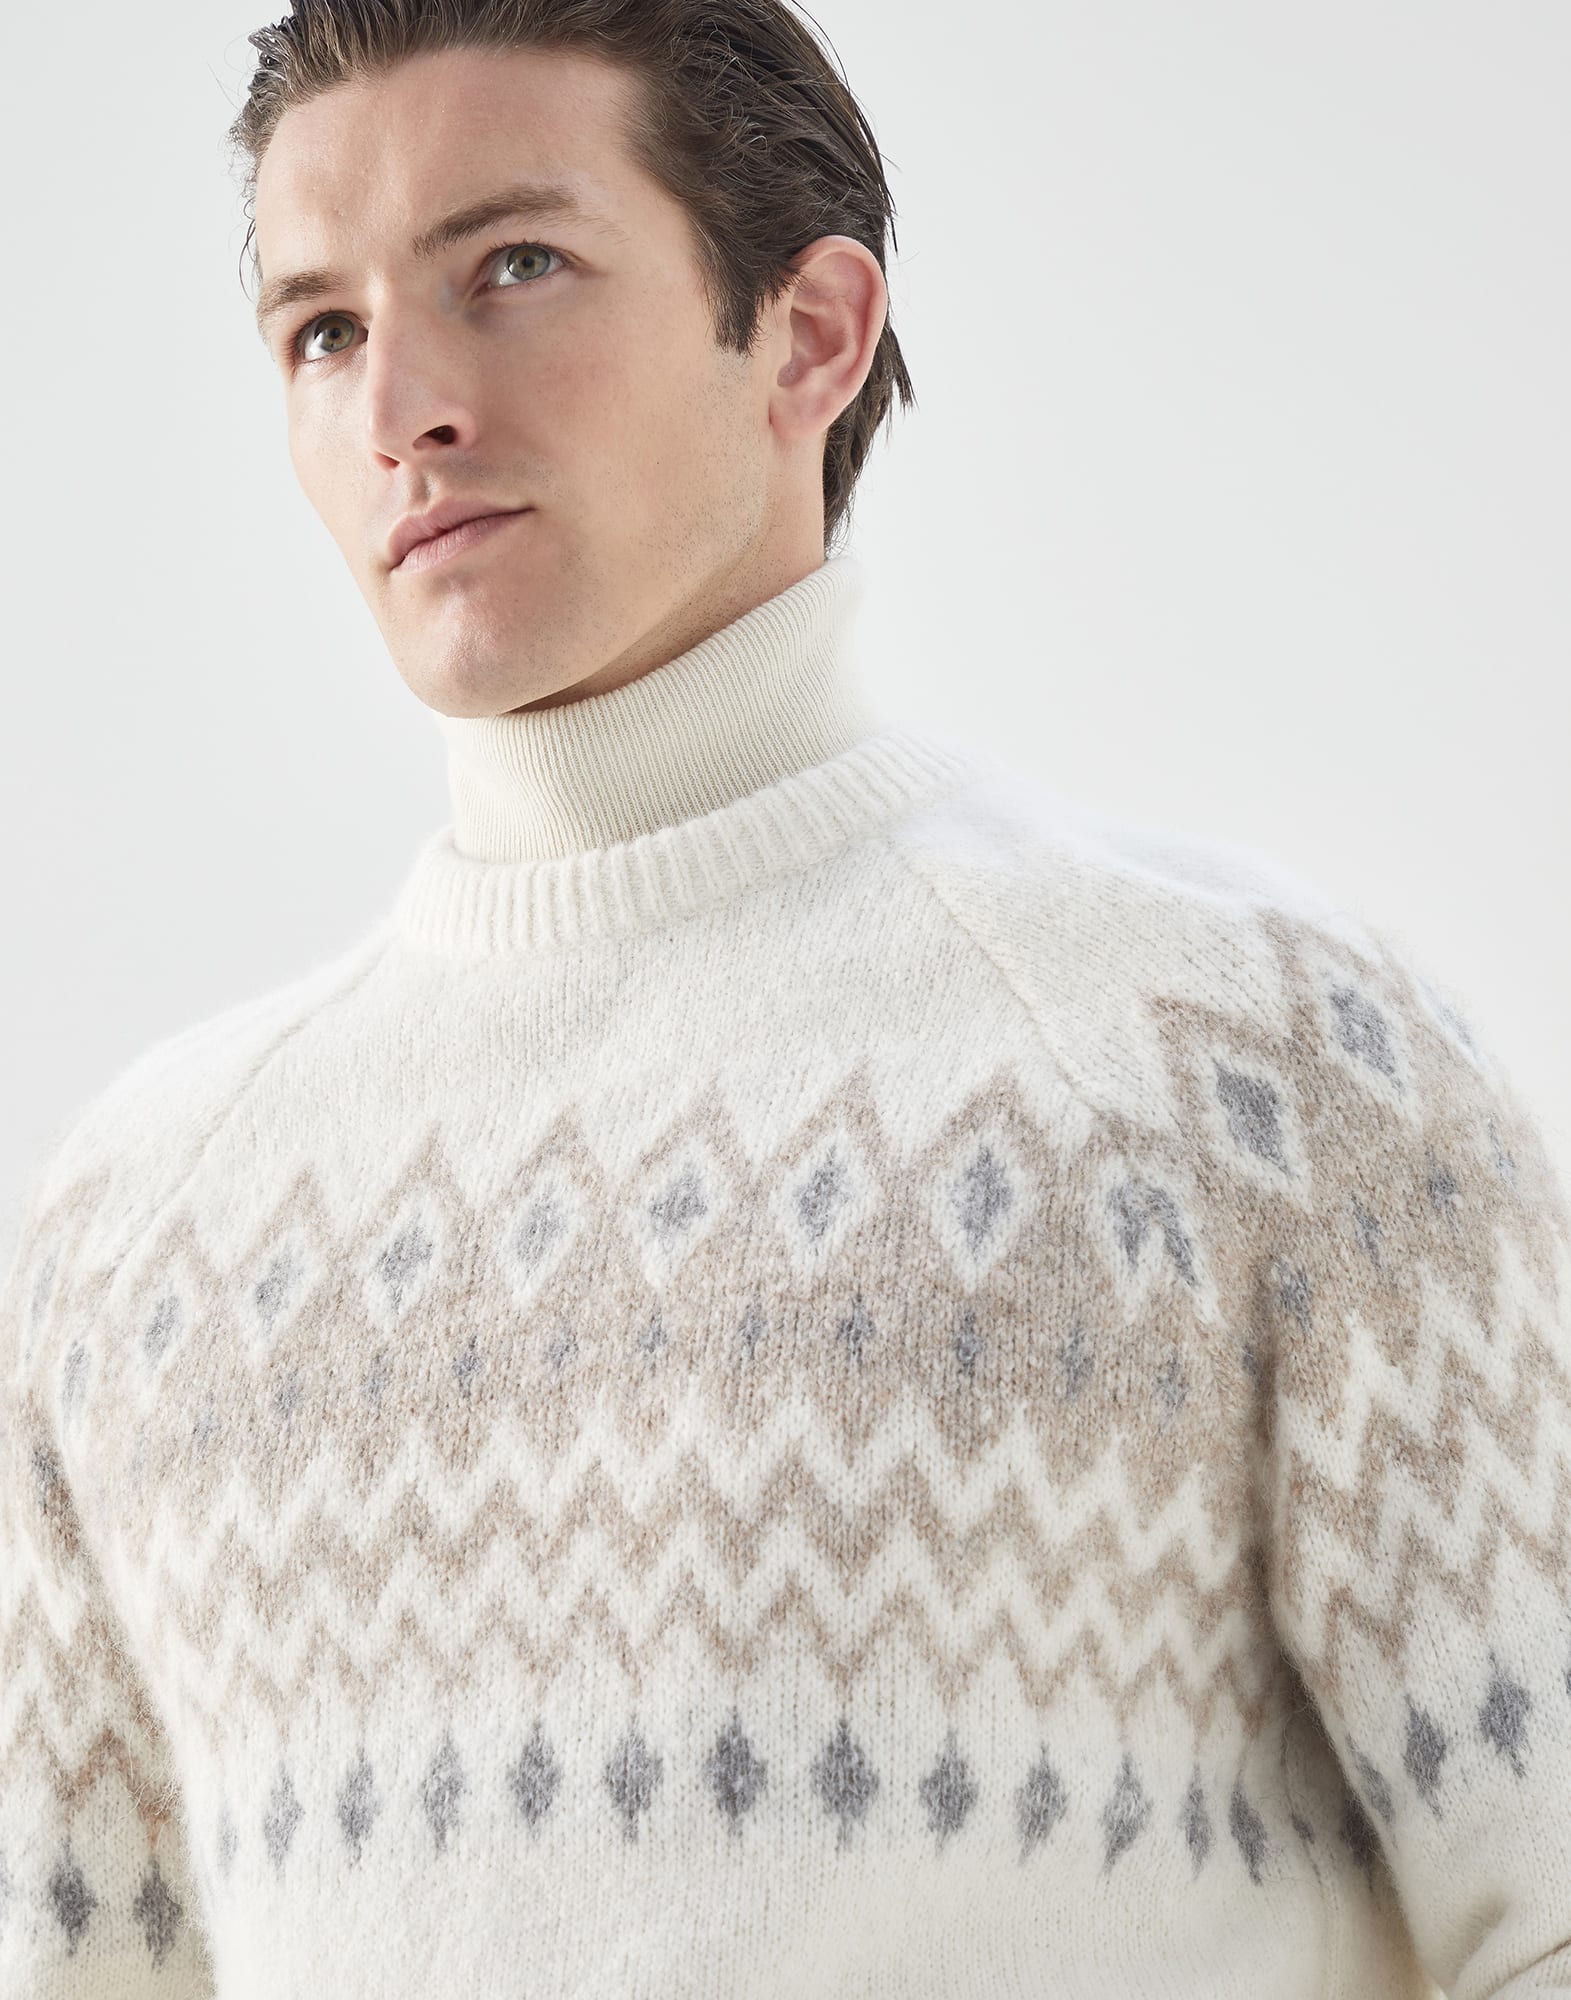 Jacquard sweater (232MSO504300) for Man | Brunello Cucinelli